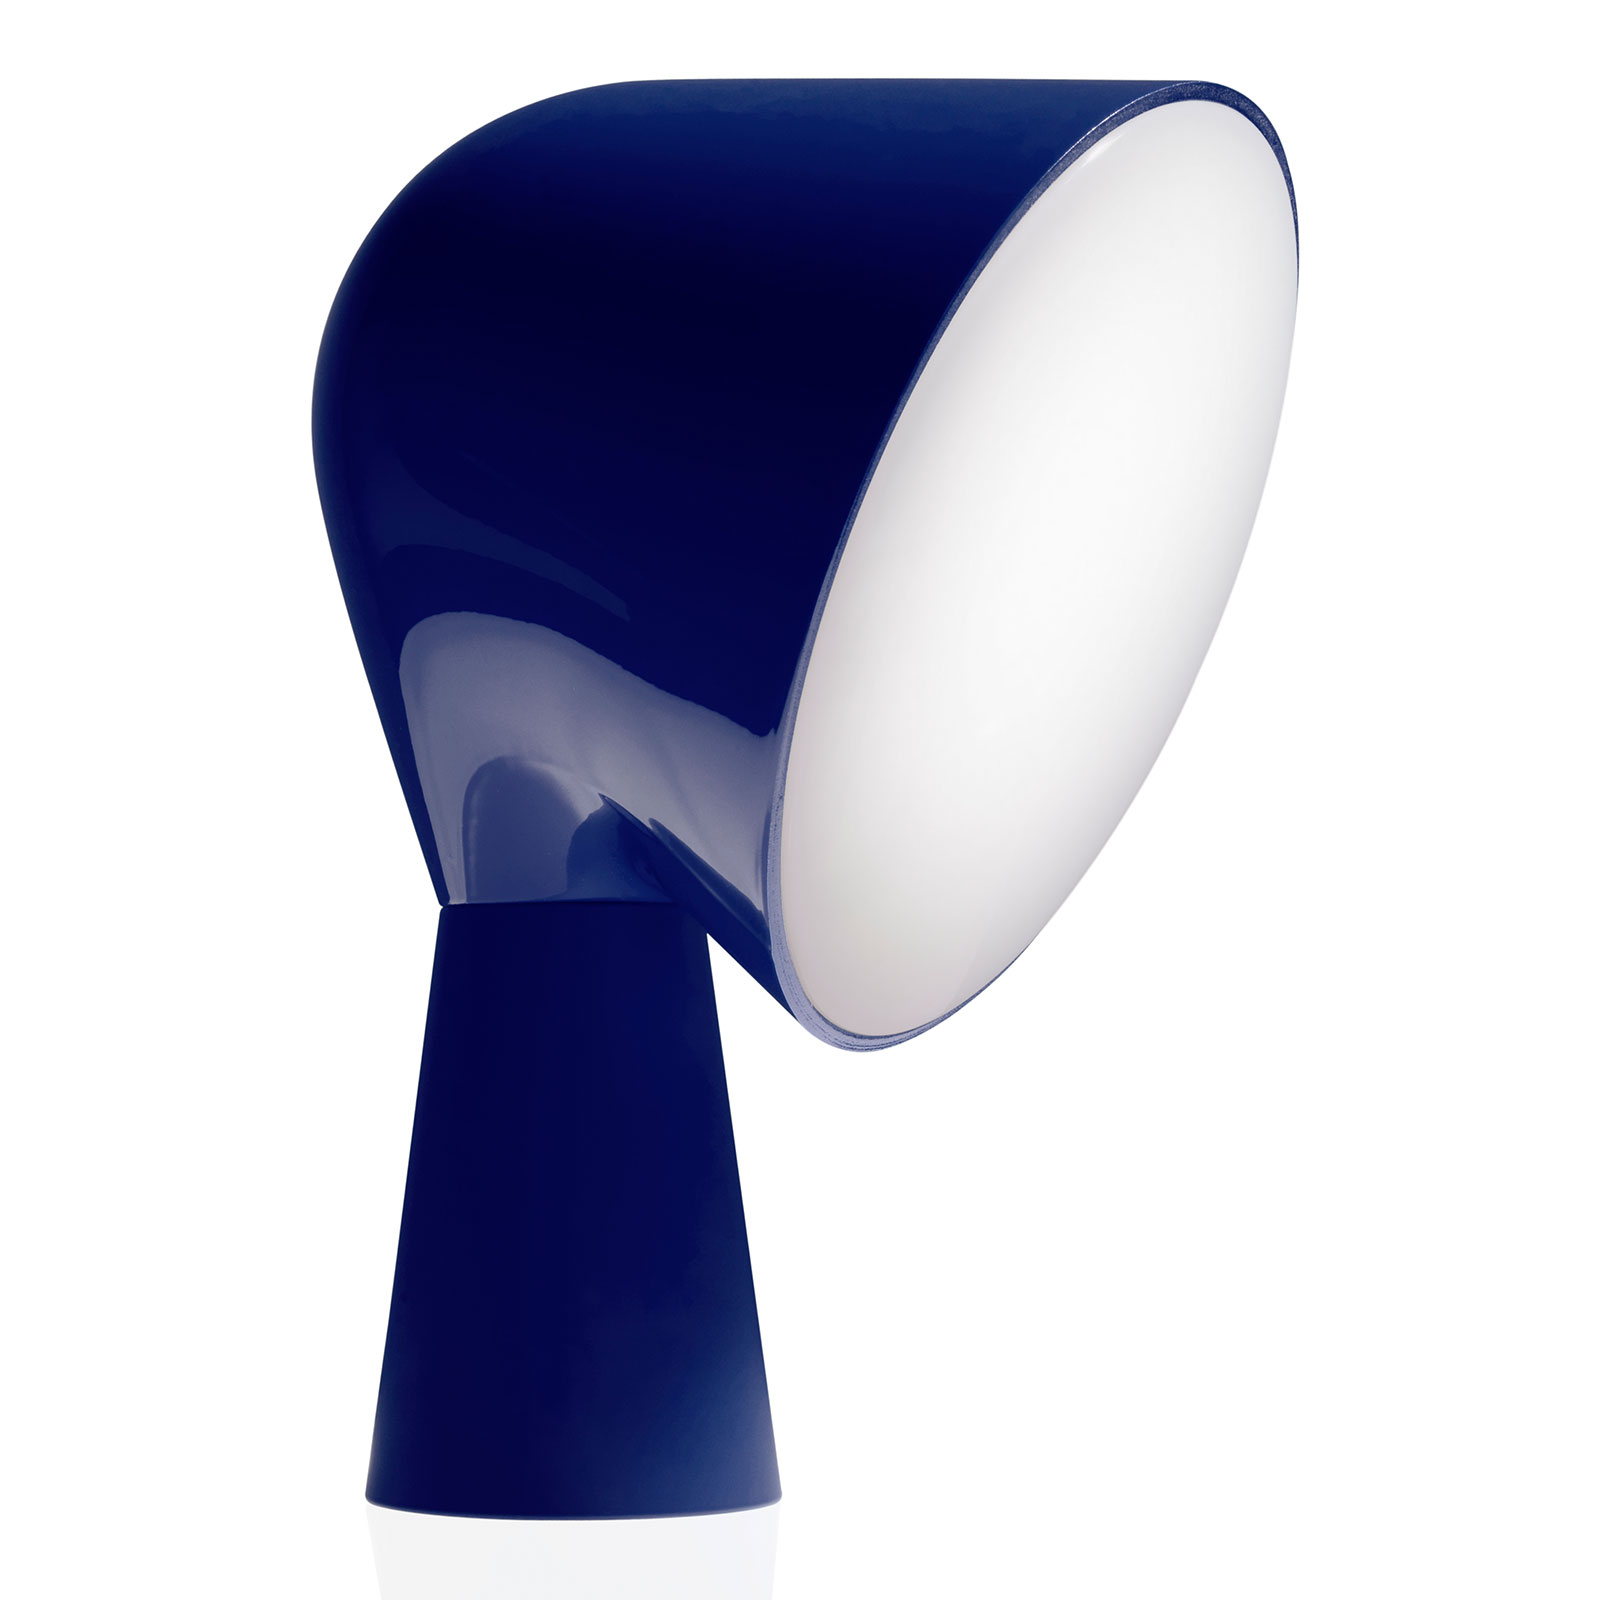 Foscarini Binic design tafellamp, blauw